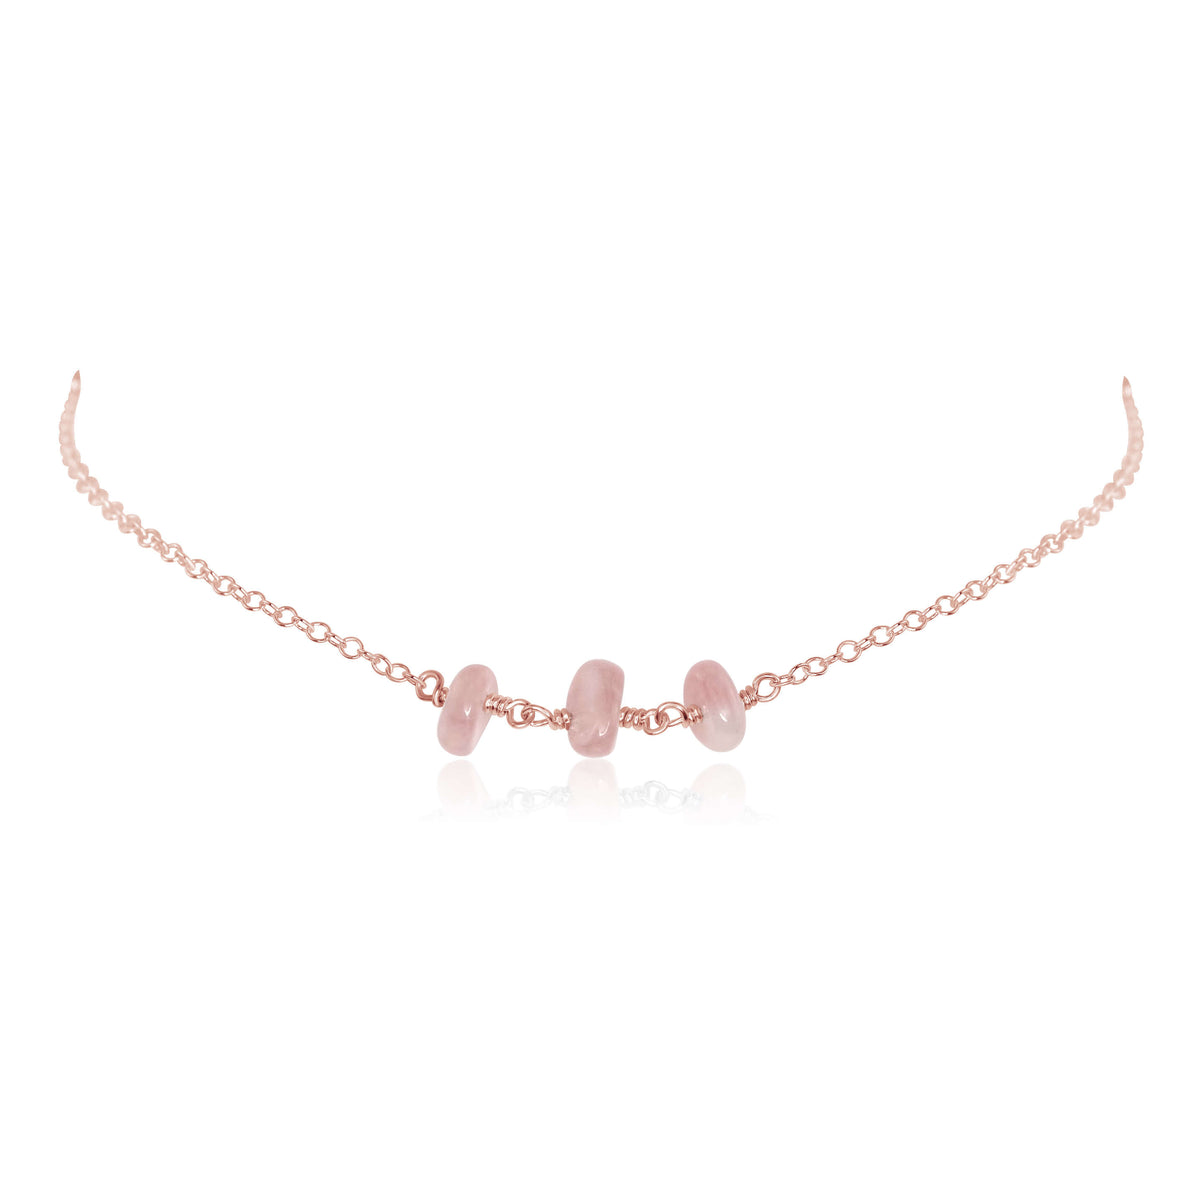 Beaded Chain Choker - Rose Quartz - 14K Rose Gold Fill - Luna Tide Handmade Jewellery